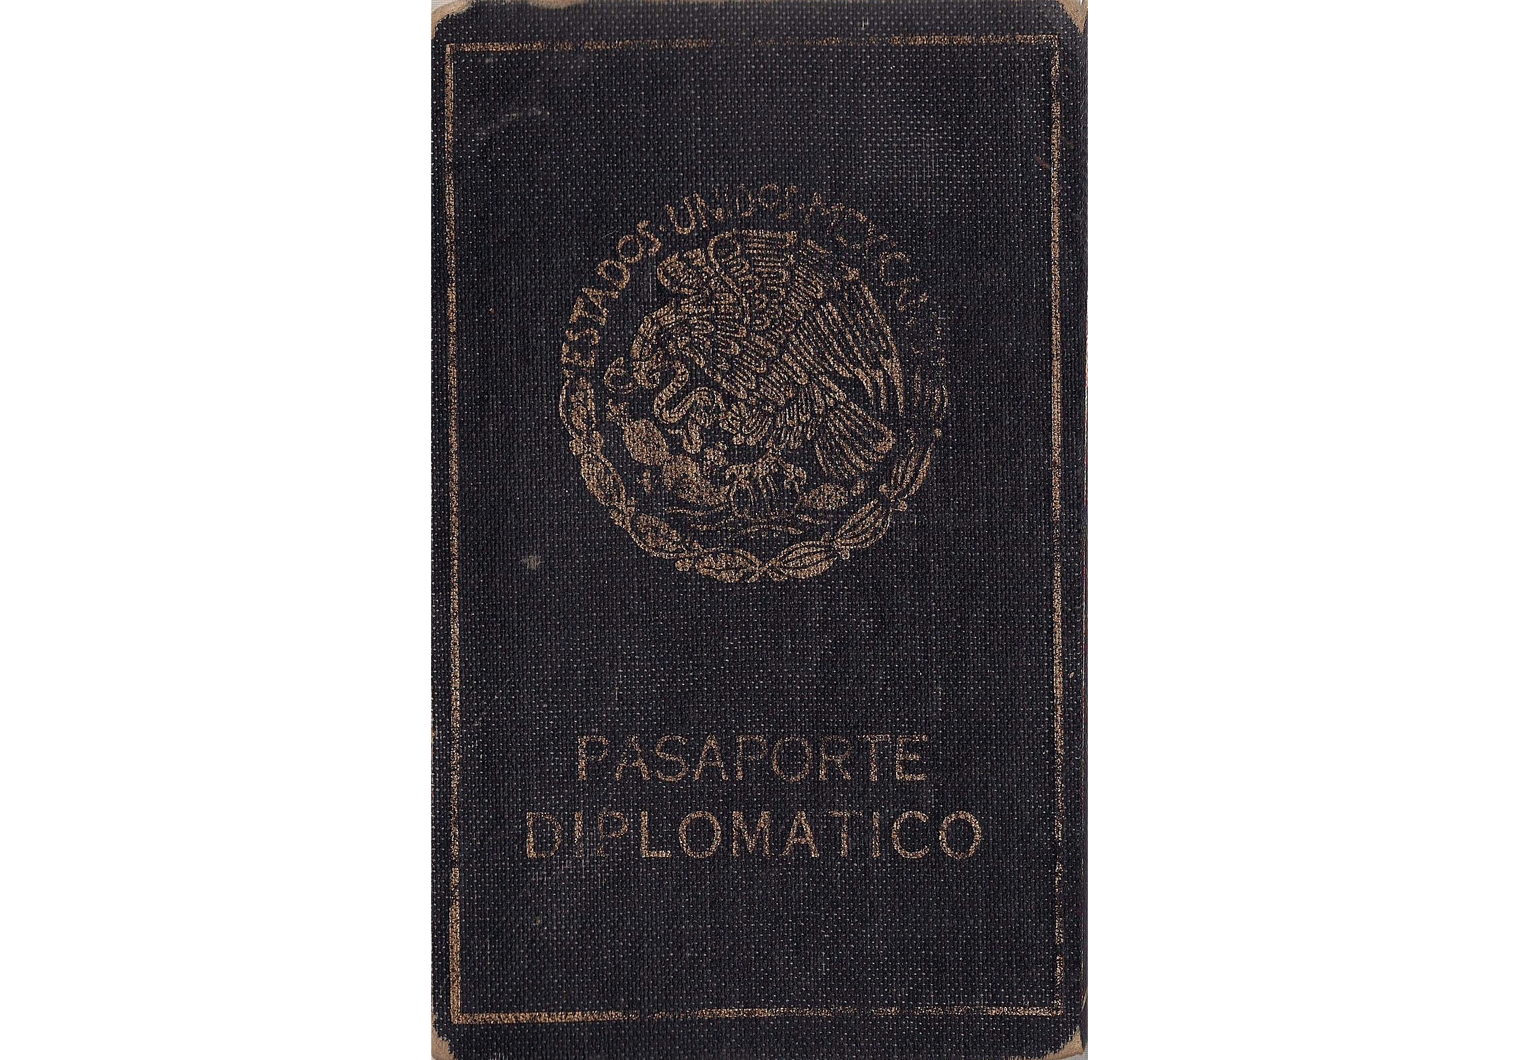 Interesting Mexican diplomatic passport